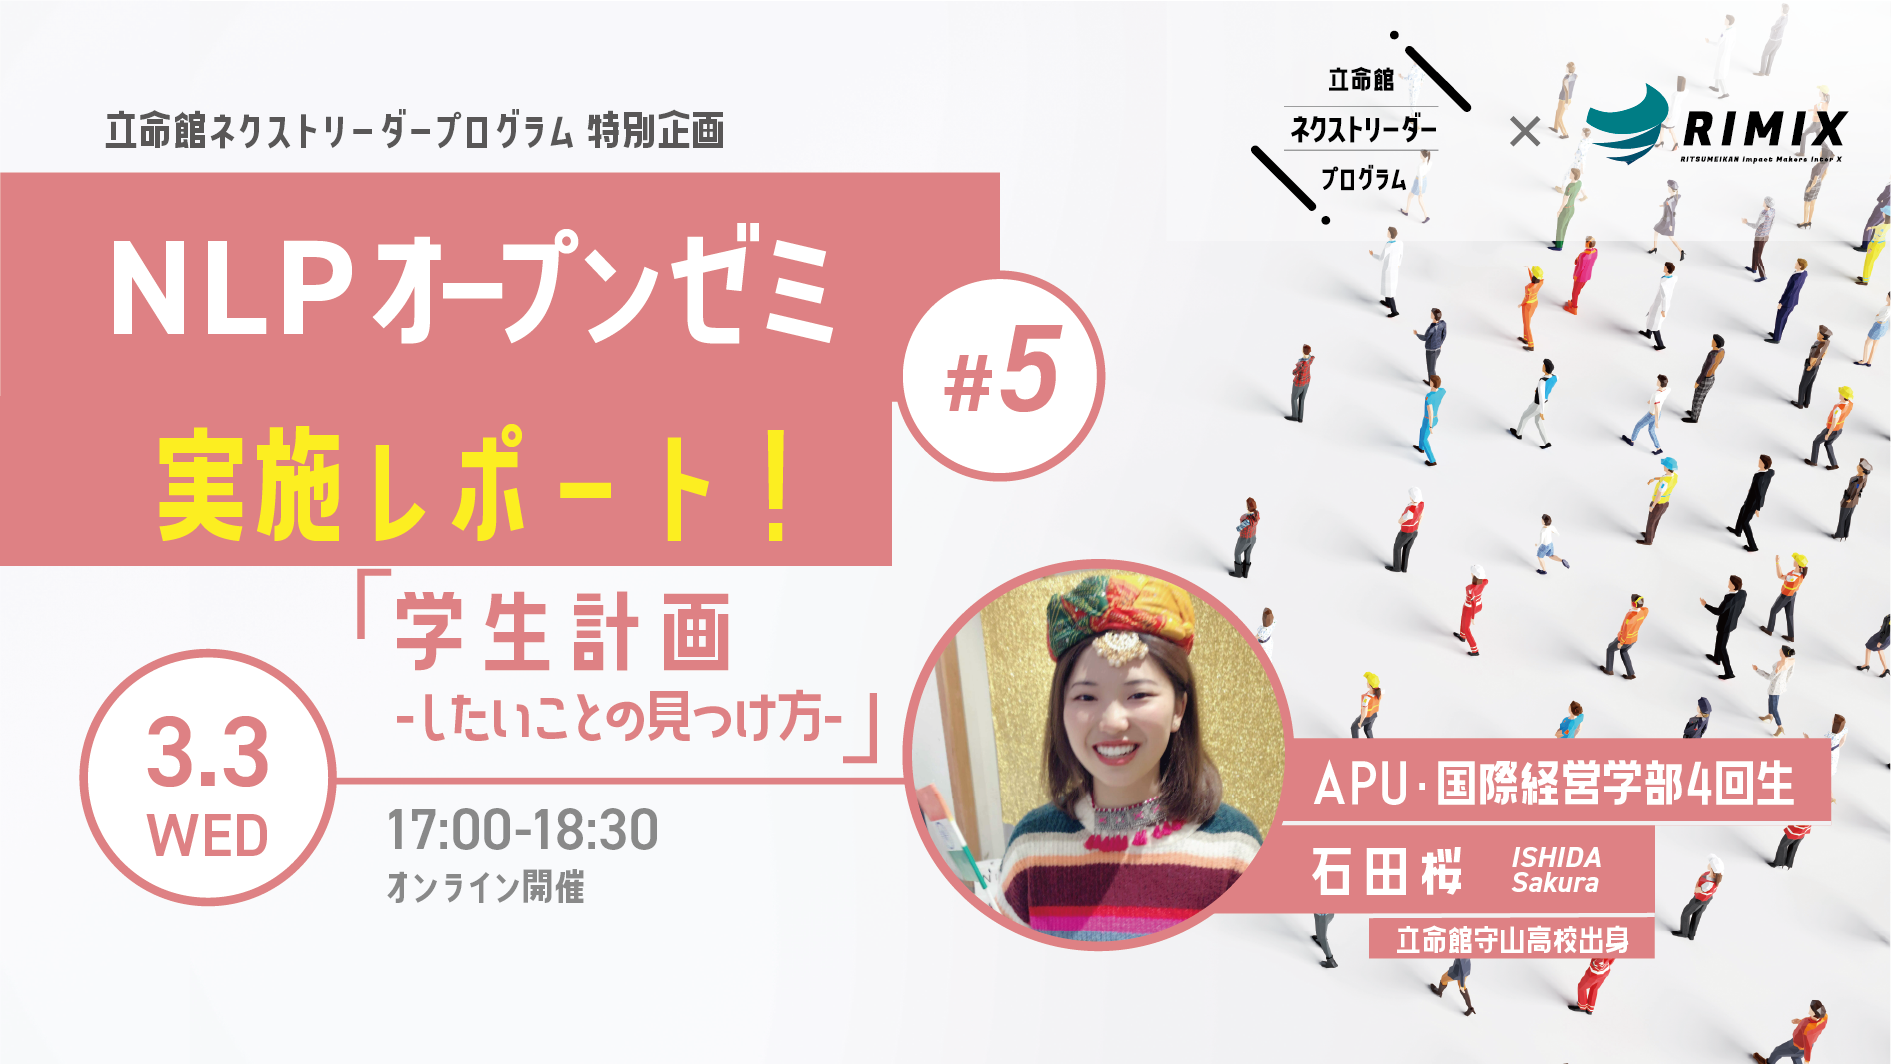 【NLPオープンゼミ#5】石田桜と語る『学生計画-したいことの見つけ方-』実施レポート